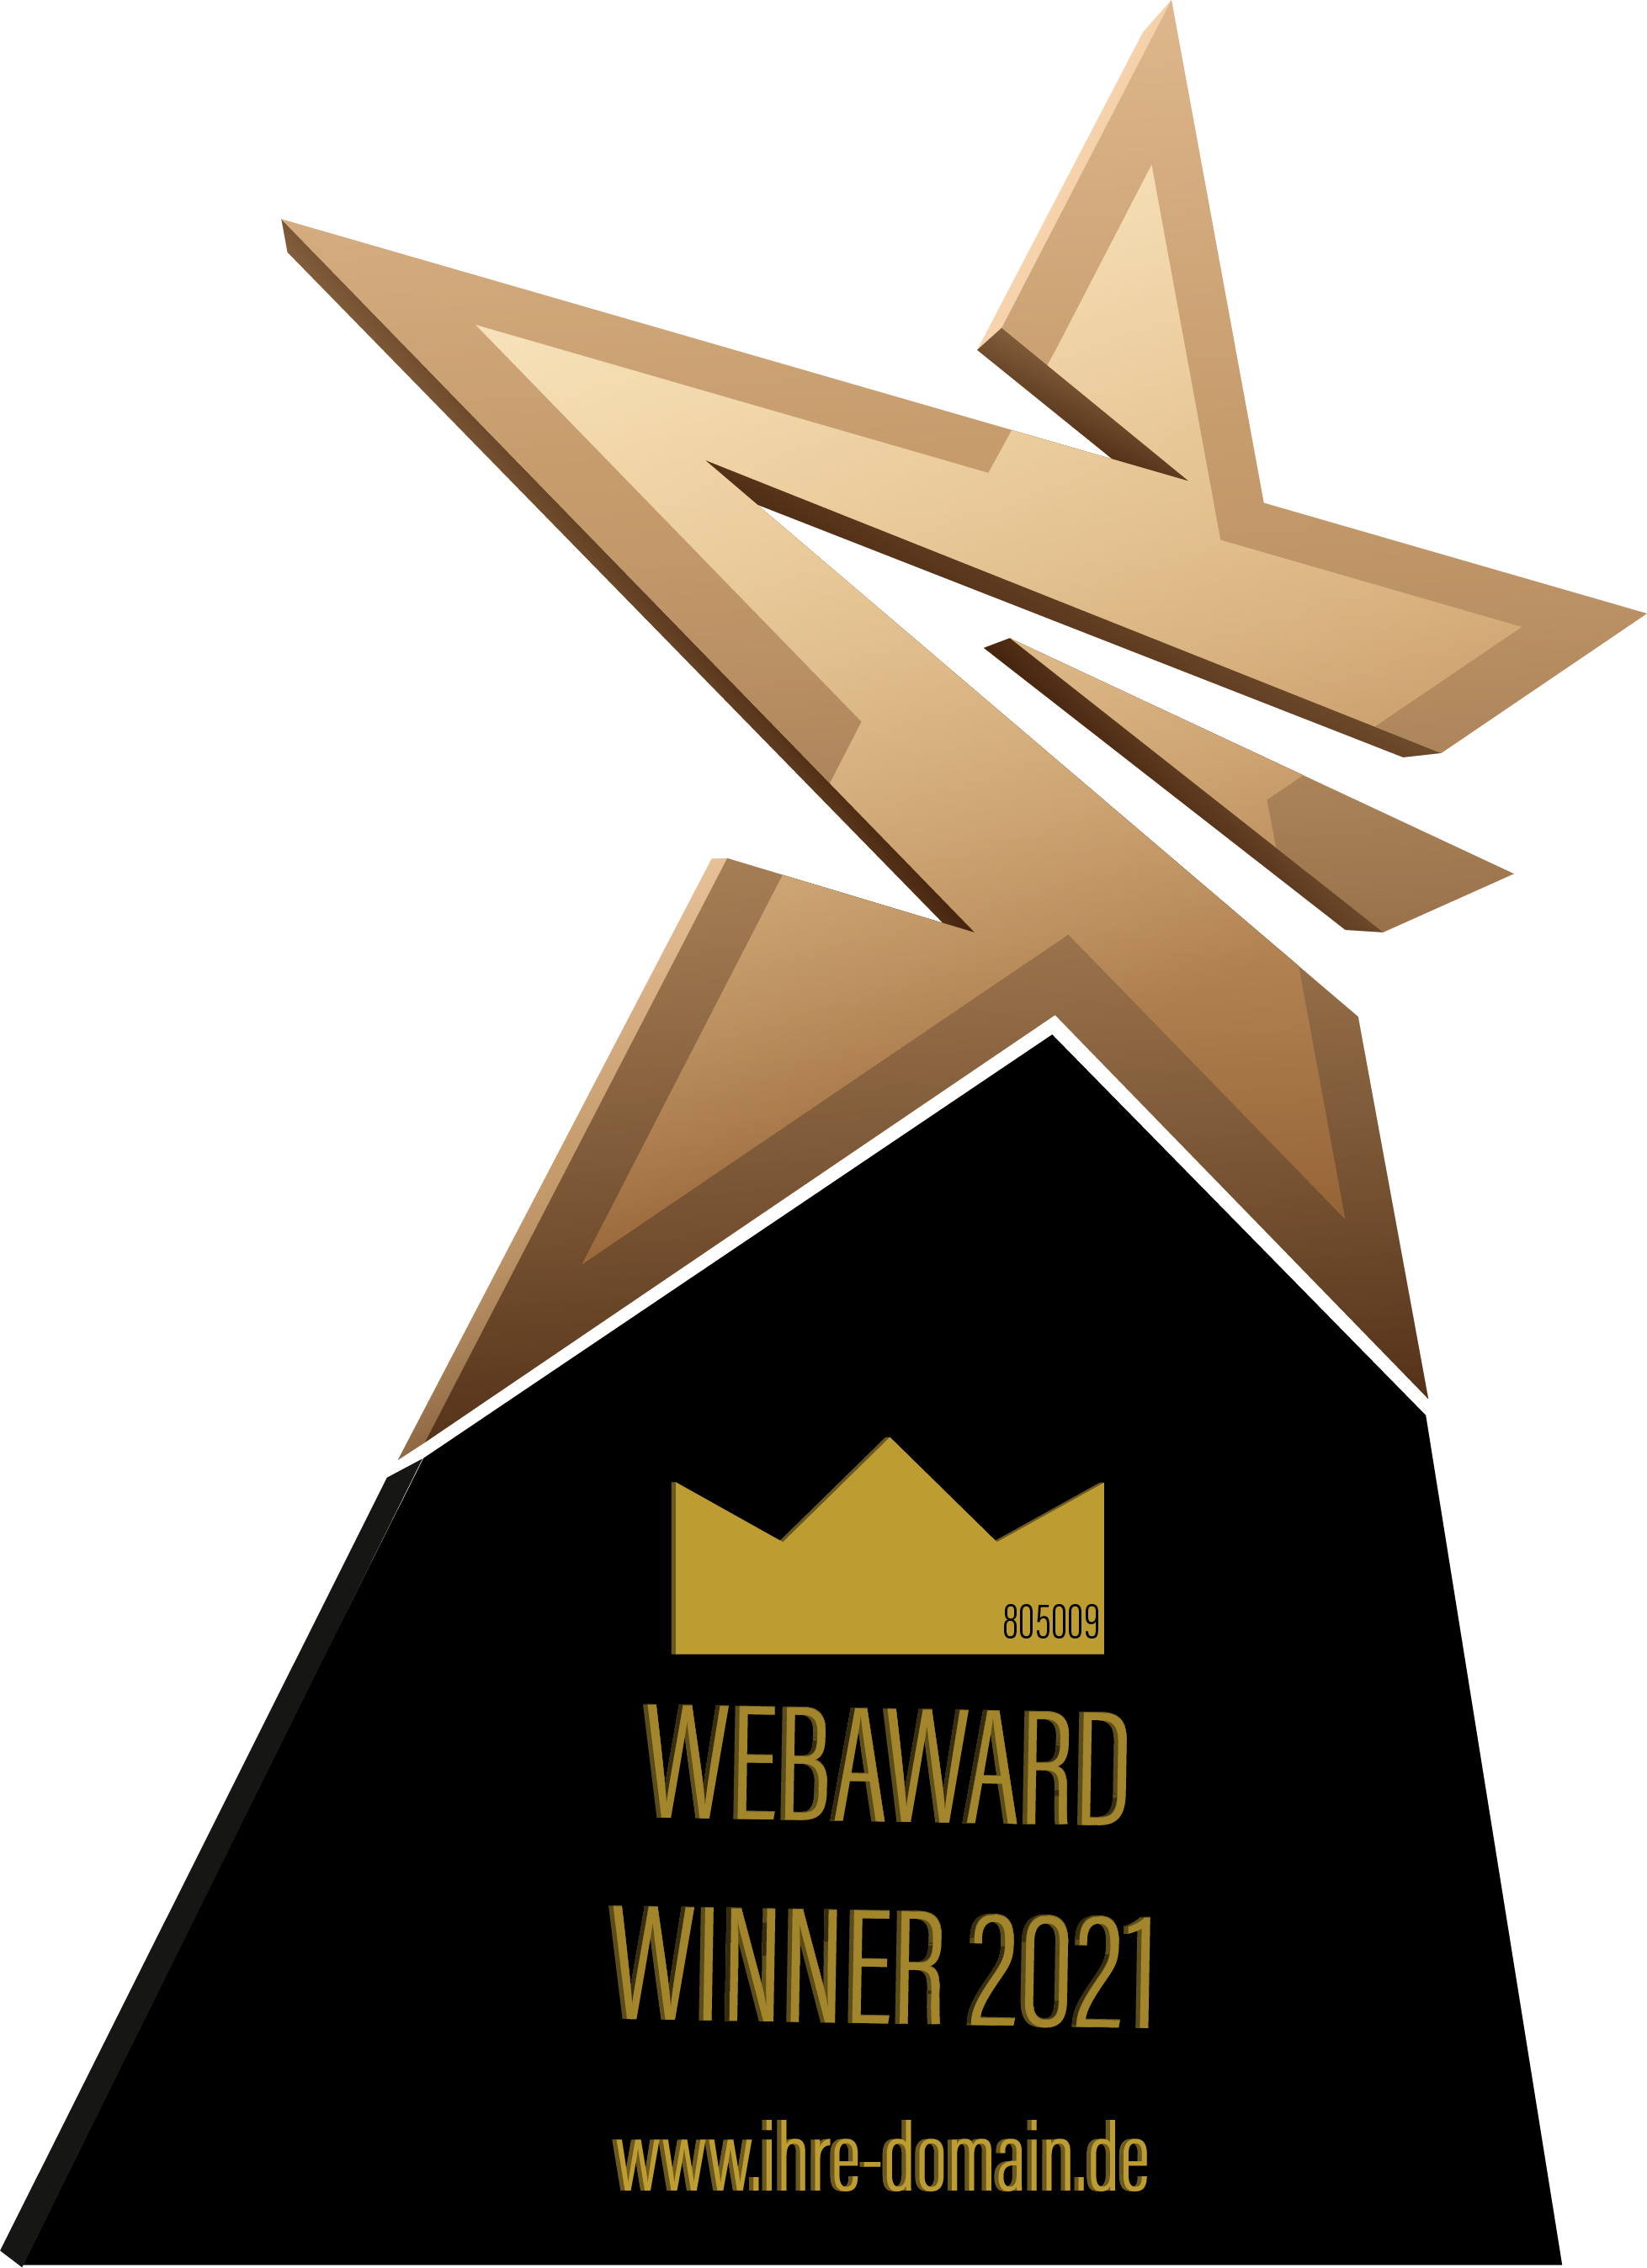 Webaward Academy Award